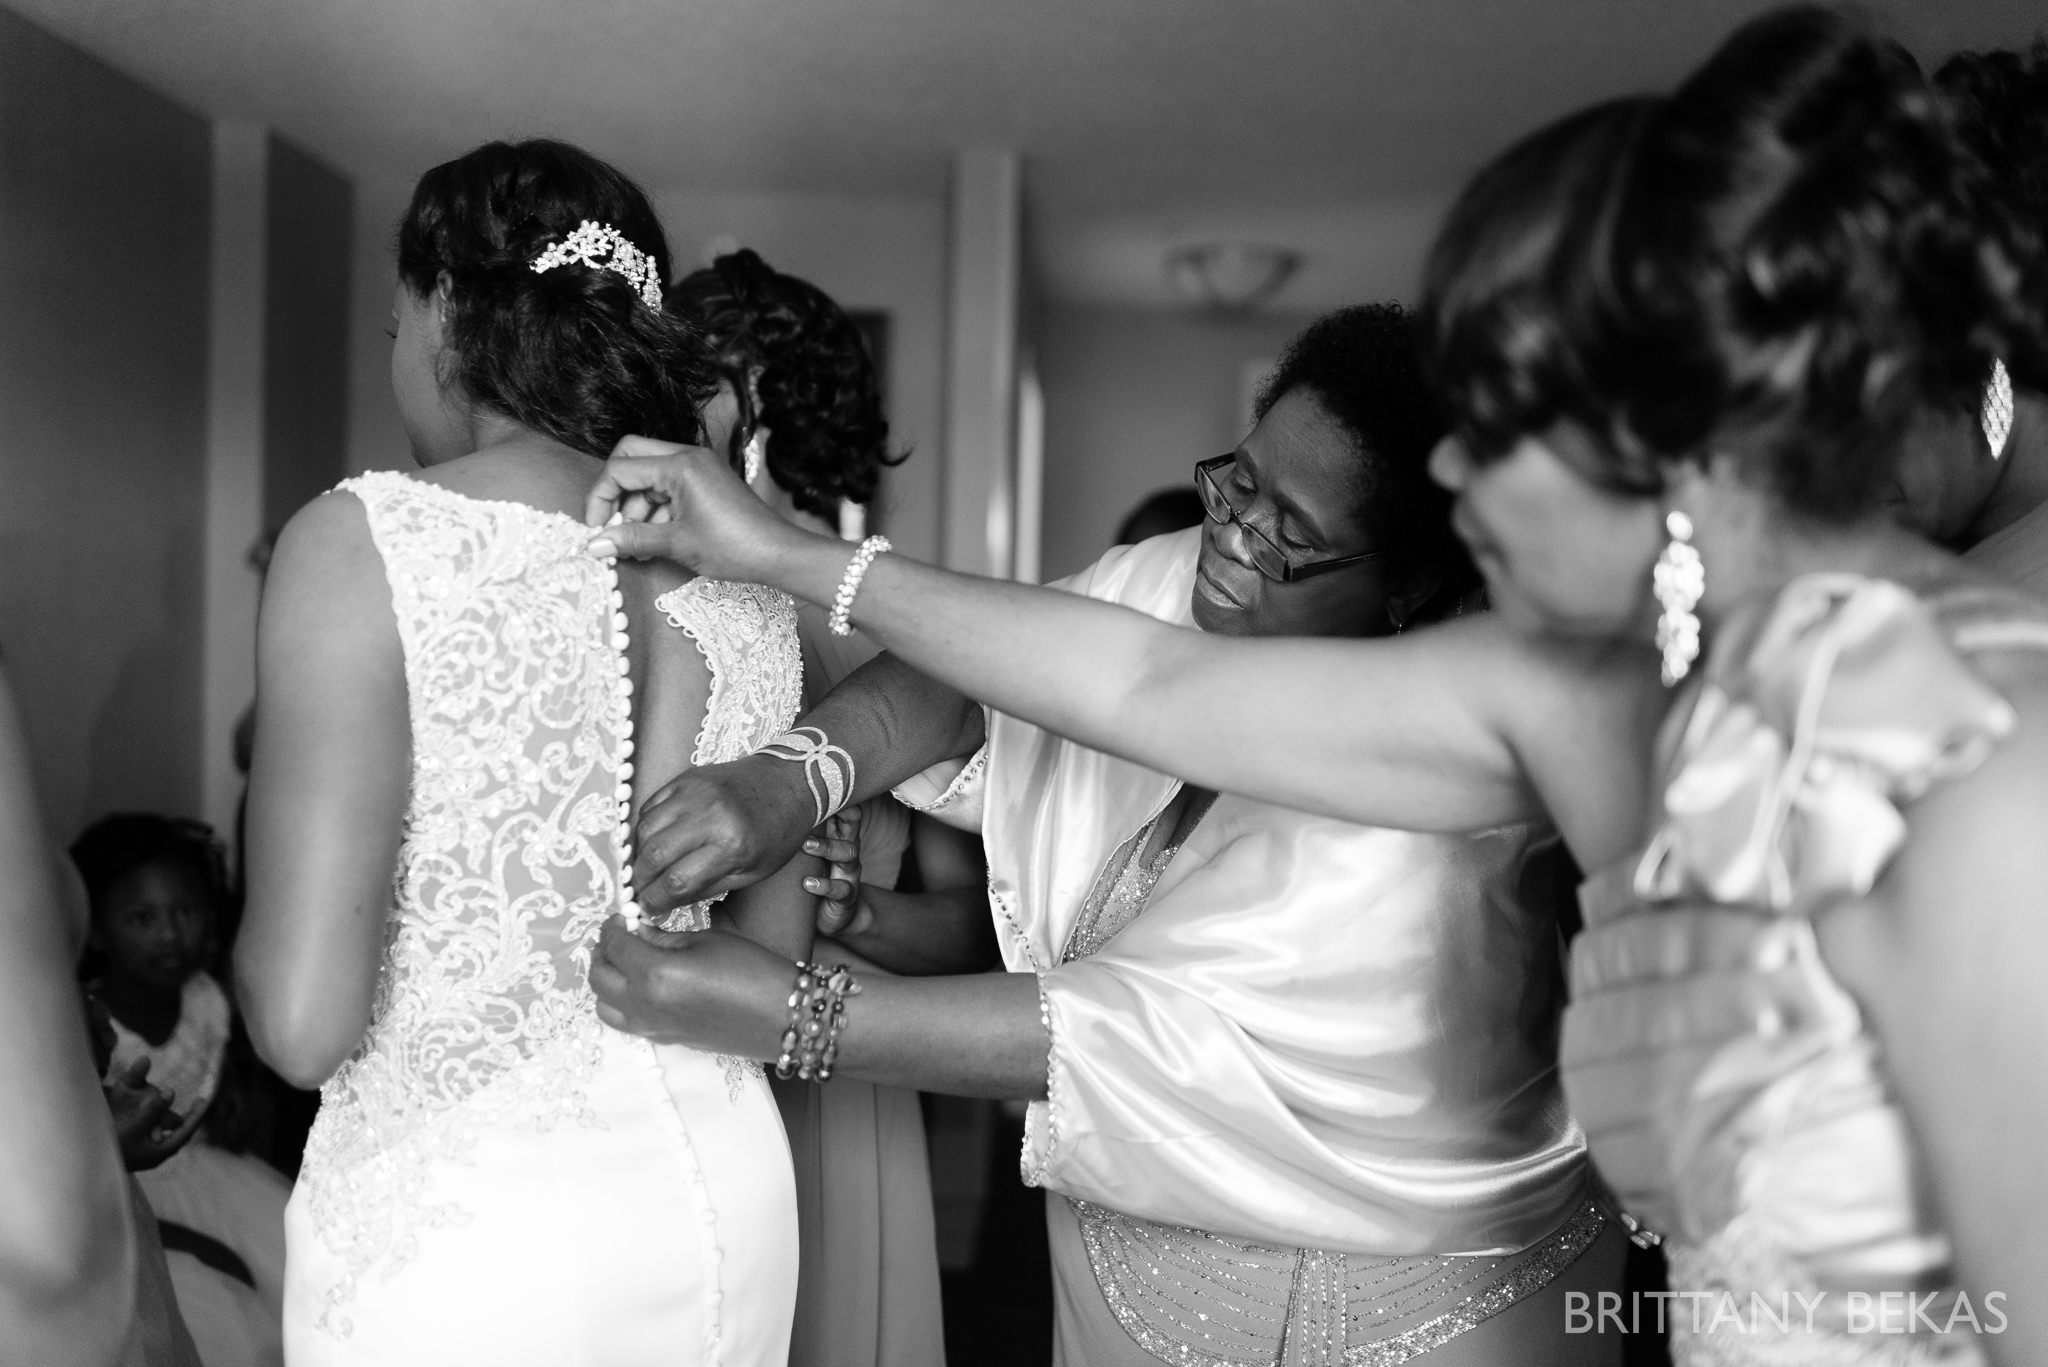 Patrick Haley Mansion Wedding - Brittany Bekas Photography_0005